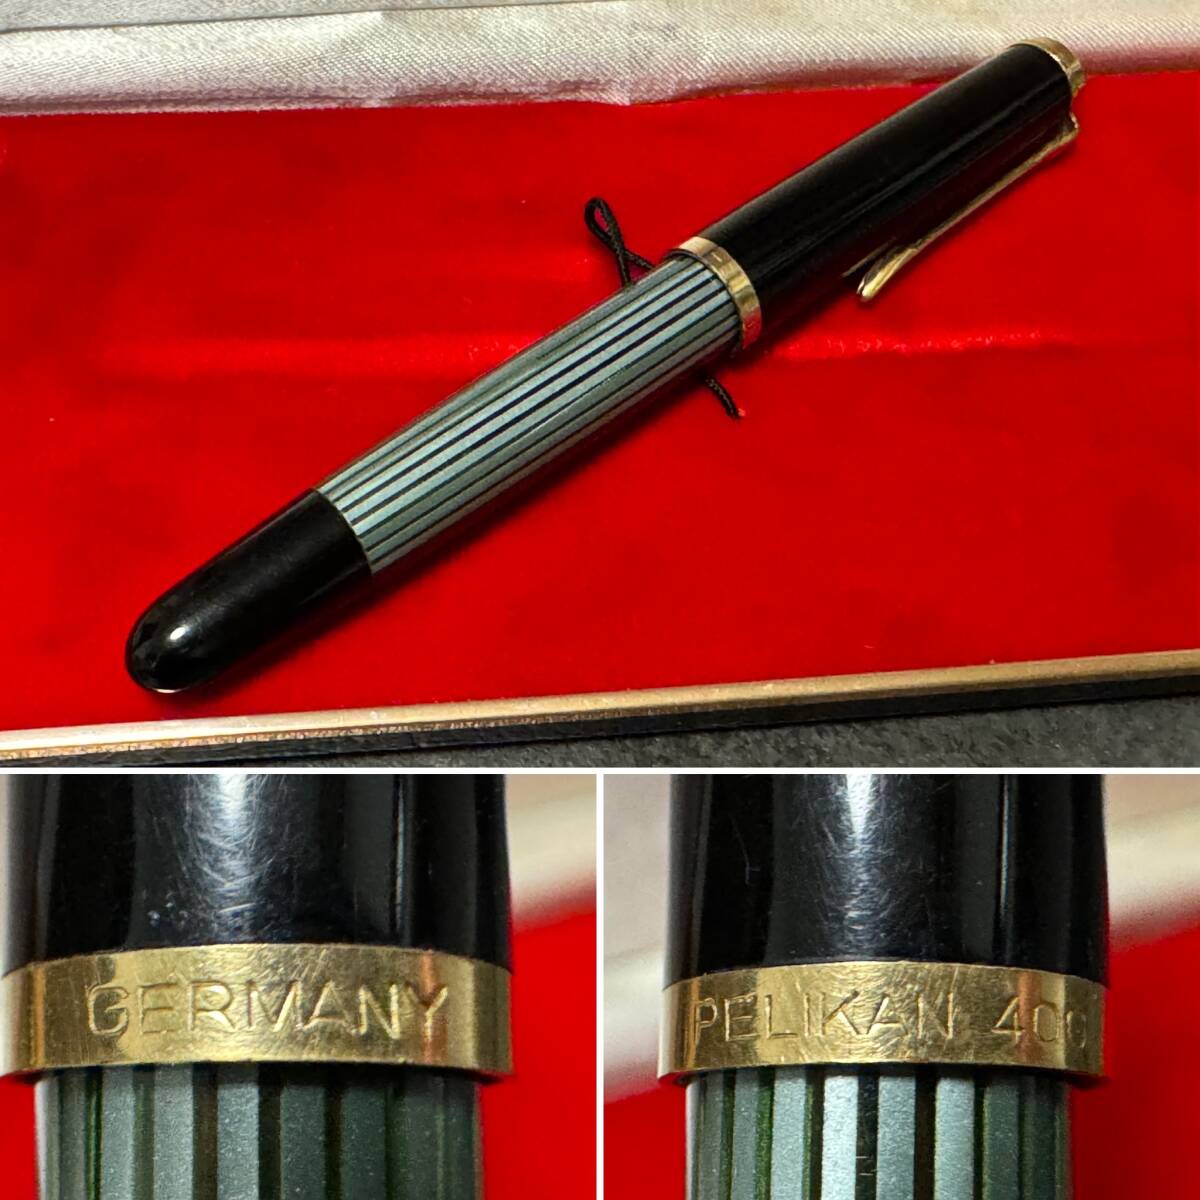 *Pelikan pelican fountain pen #400* pen .14G-585*1974 year circle . buy goods * Germany made *